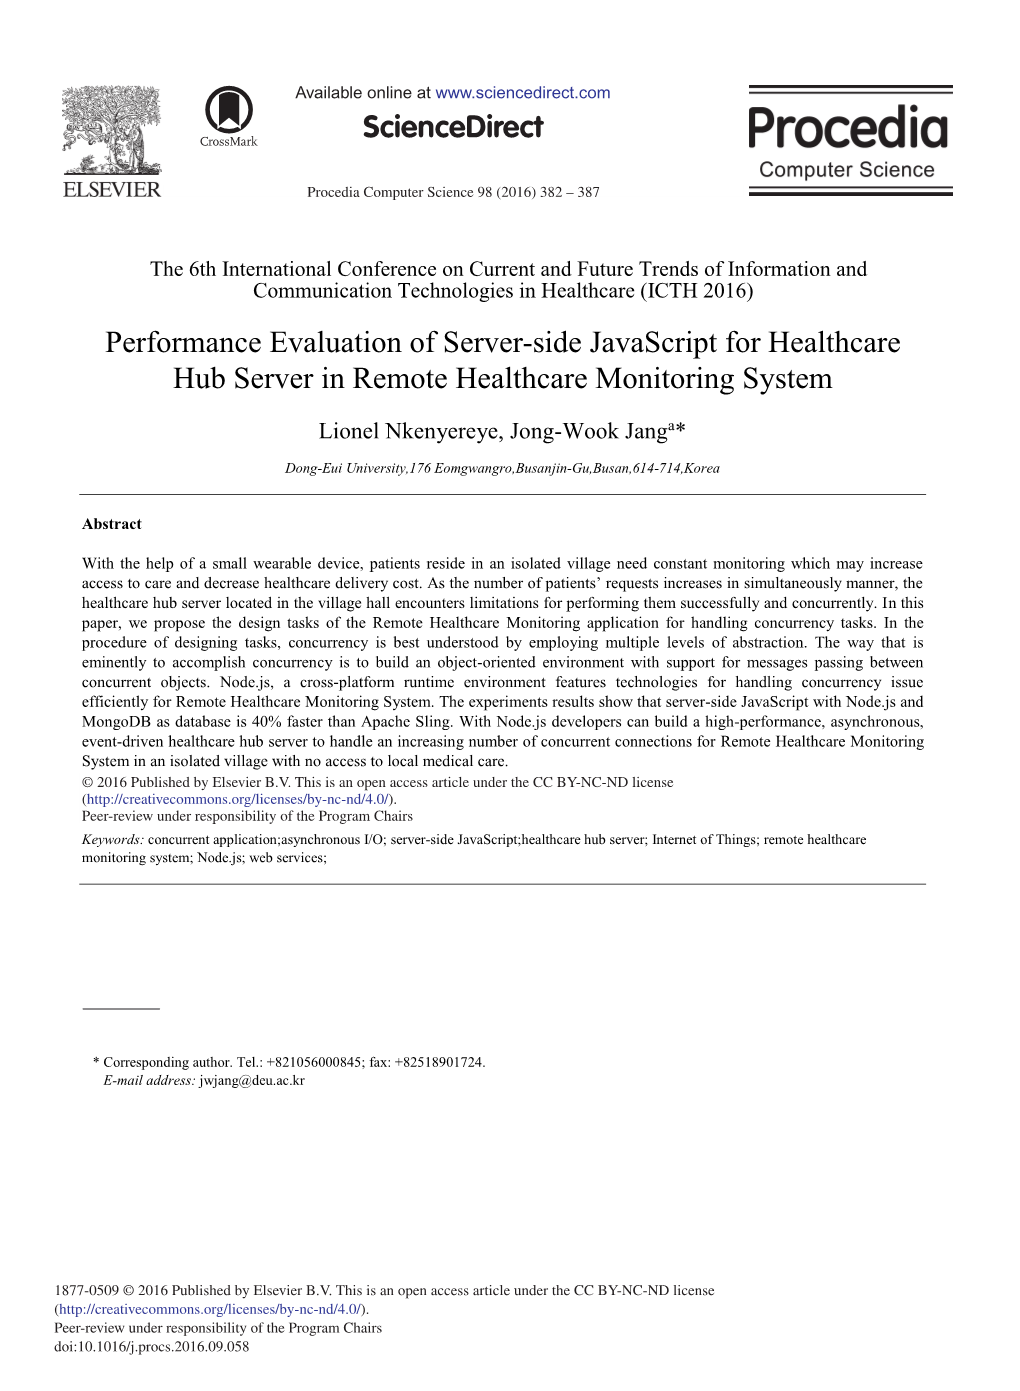 Performance Evaluation of Server-Side Javascript for Healthcare Hub Server in Remote Healthcare Monitoring System